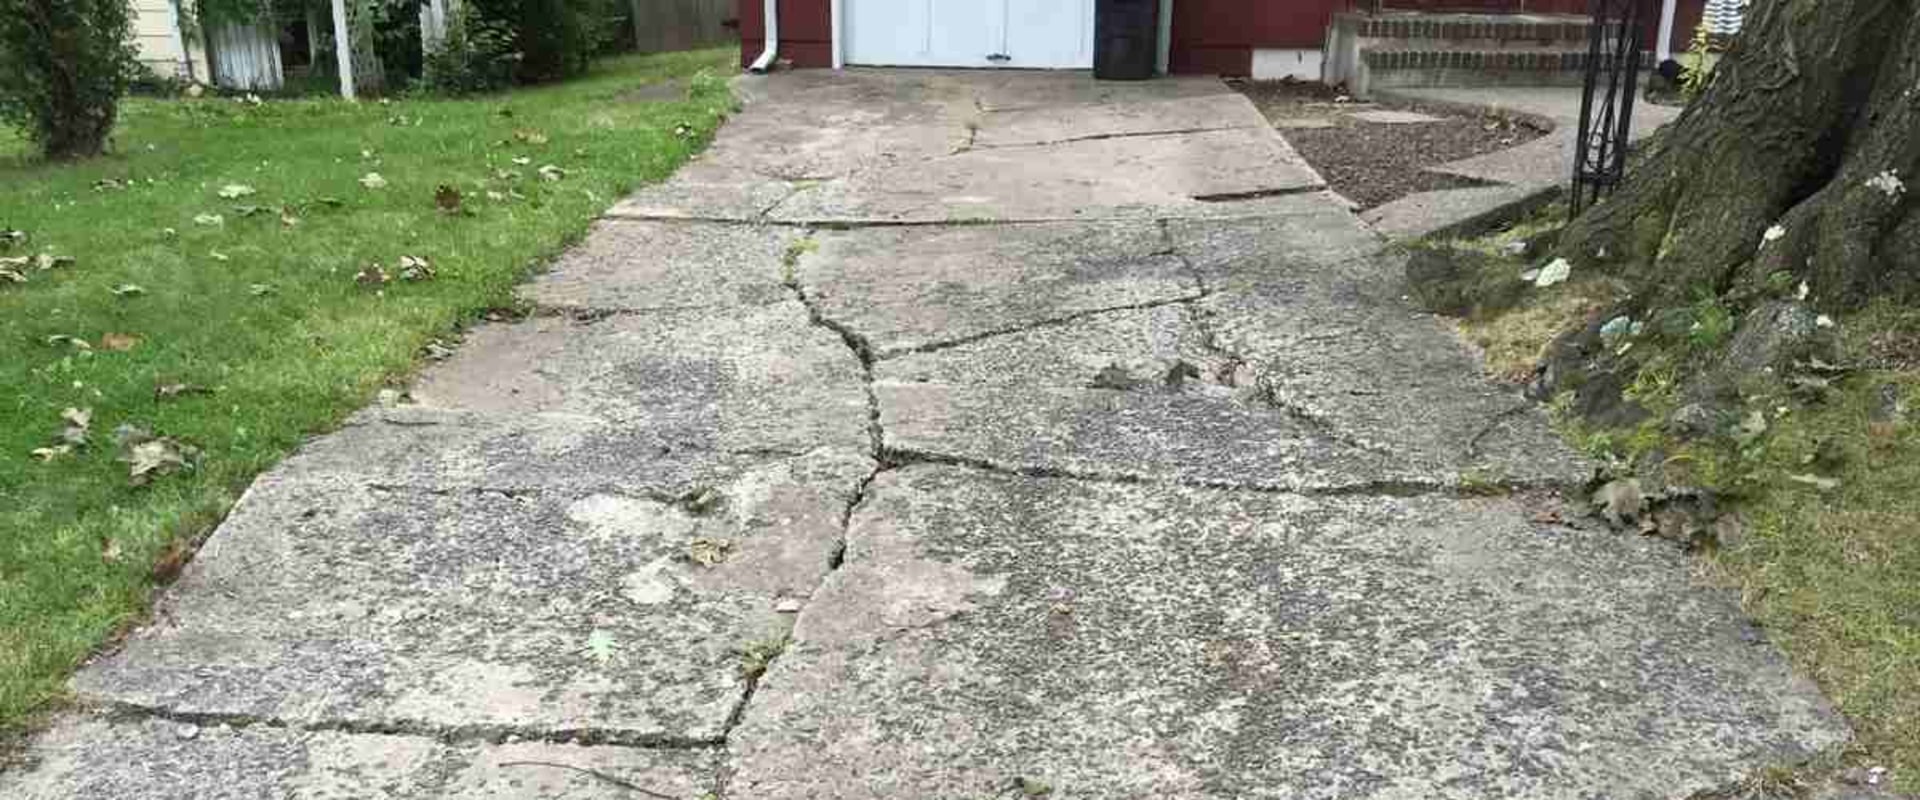 Can you repair cracks in concrete driveway?